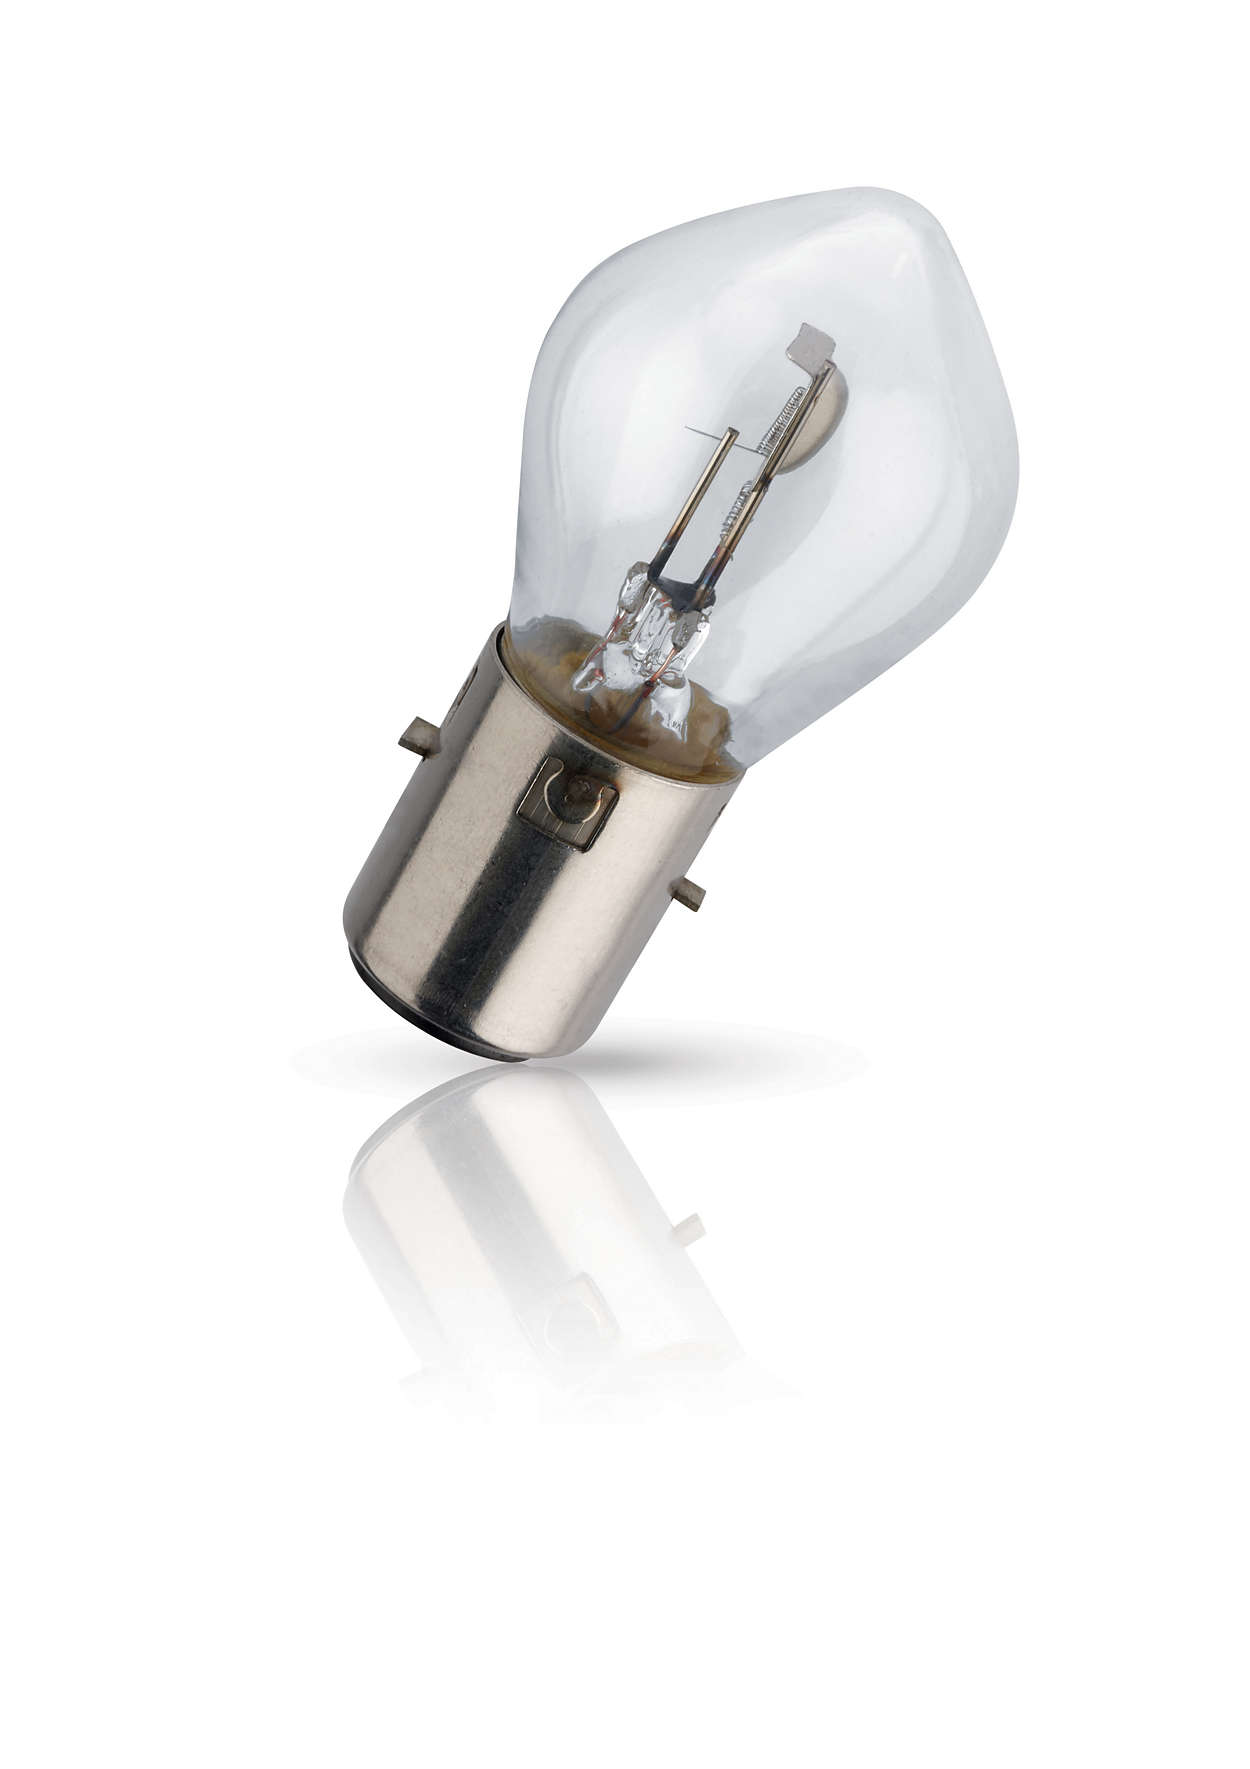 Купить лампочку на 1. Philips Vision 12728bw s2 12v 35/35w. Лампа s2 12v 35/35w светодиодная. Лампа 12v s2 35+35 Вт (ba20d) мото (Маяк). Лампа ba20d 12v 35/35w светодиодная.